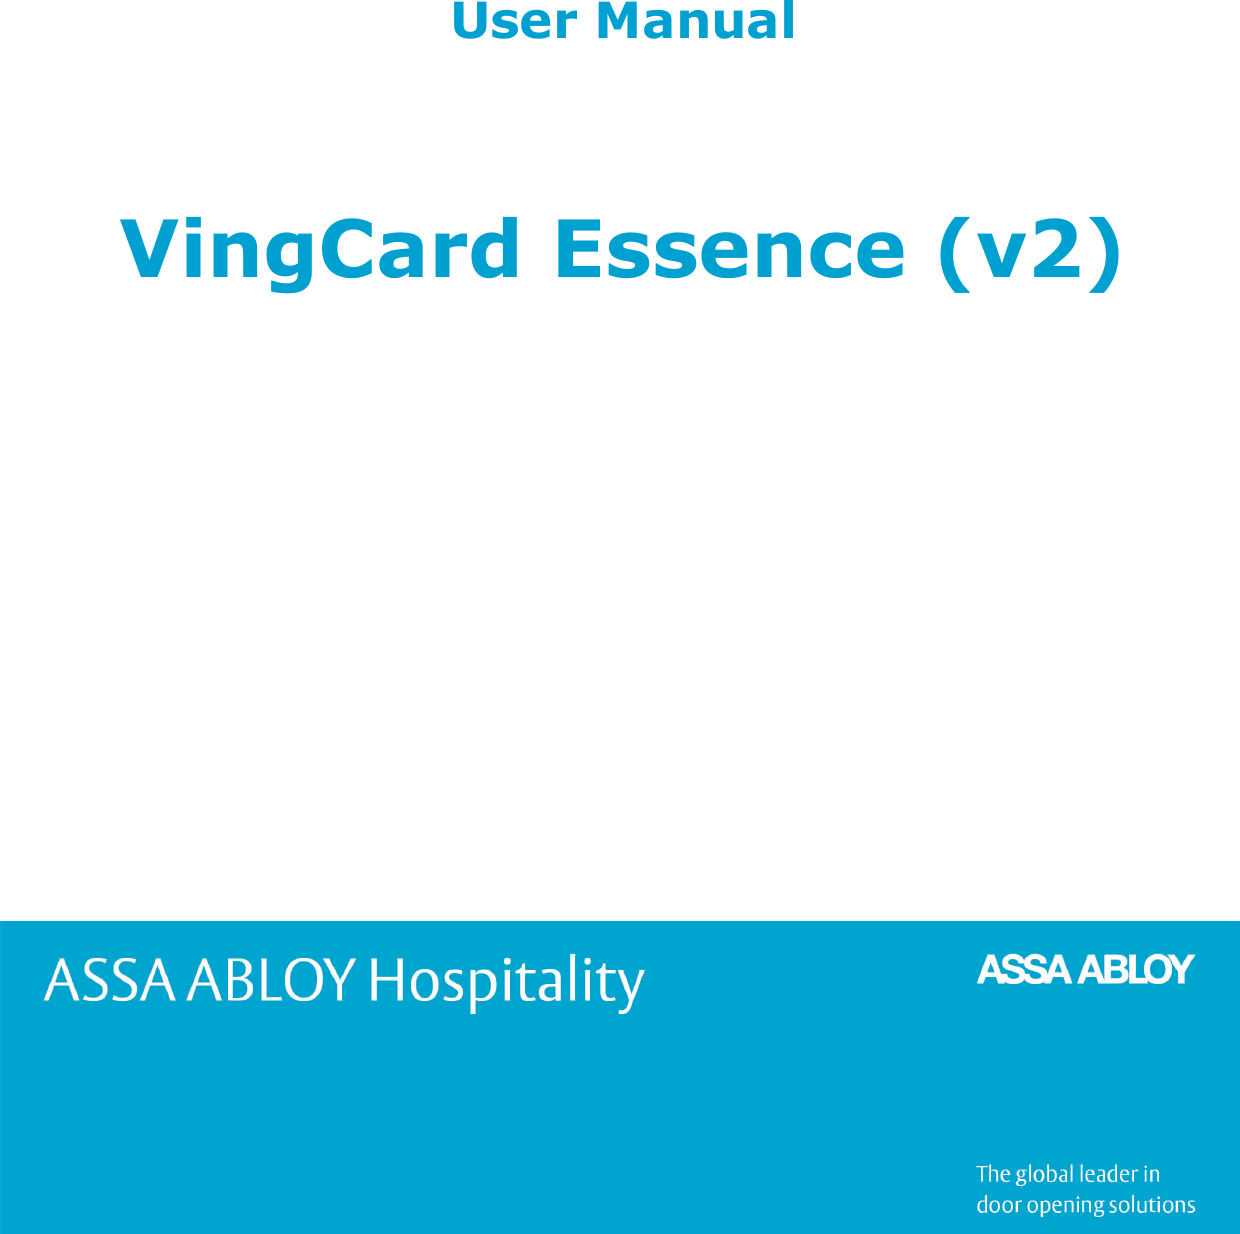 1ASSA ABLOY Hospitality 66 1000 023-4User ManualVingCard Essence (v2)